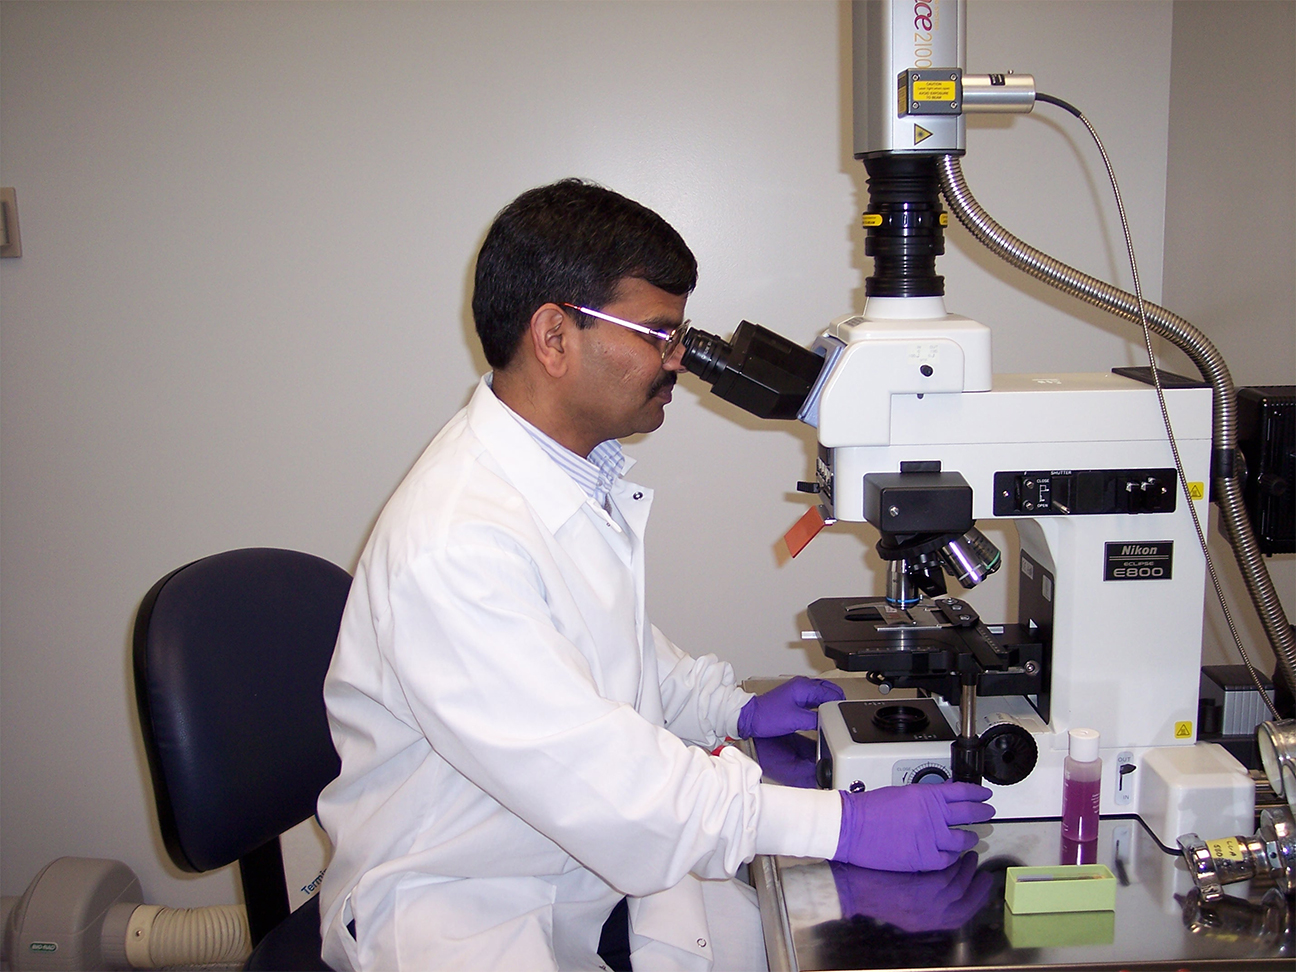 image of scientist in lab